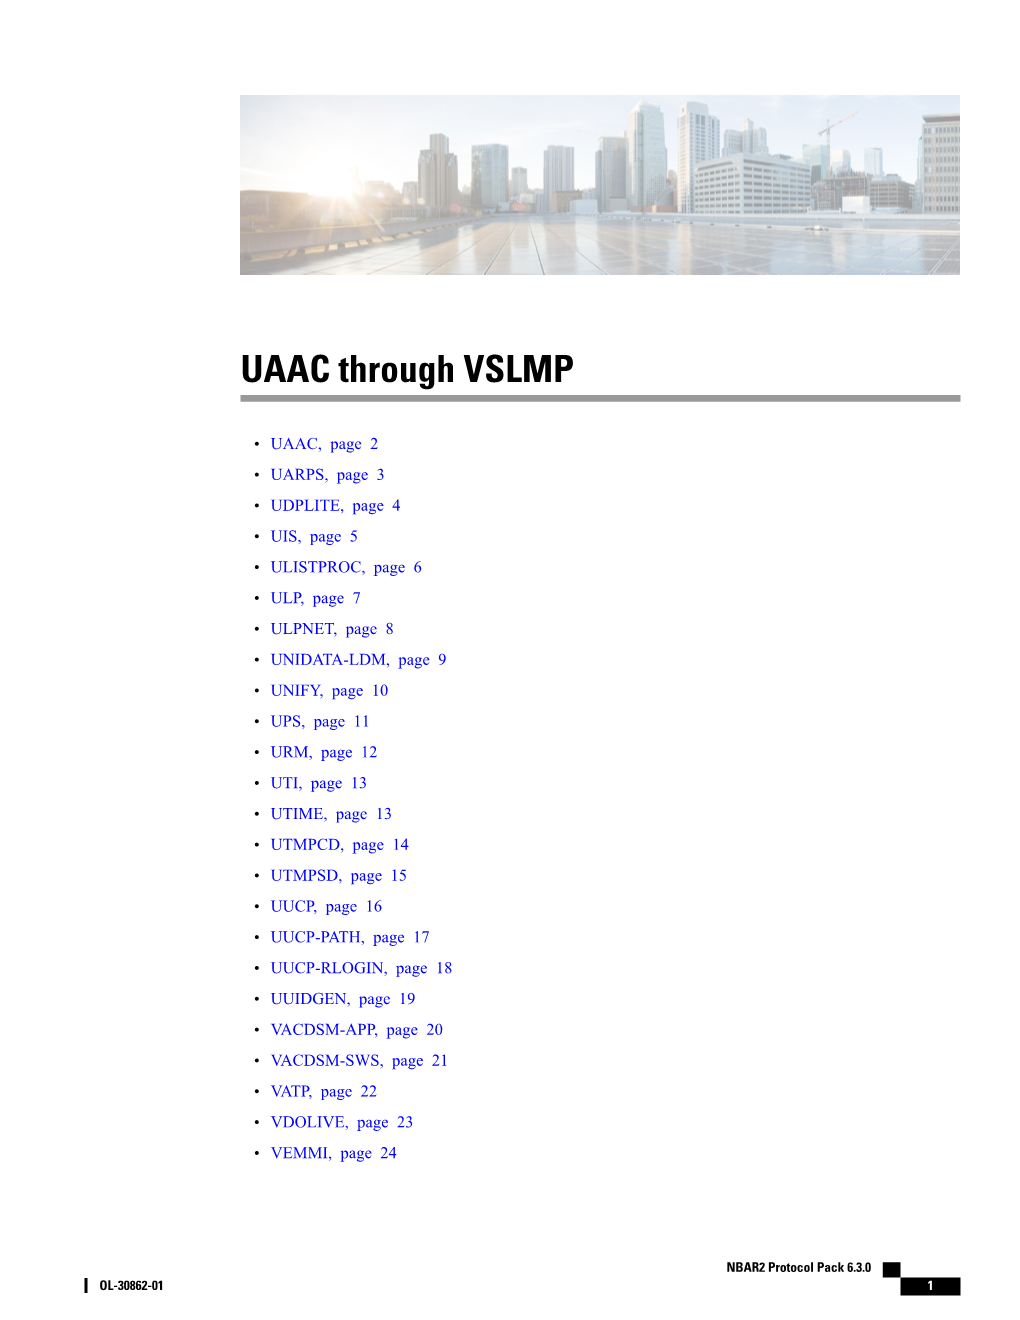 UAAC Through VSLMP